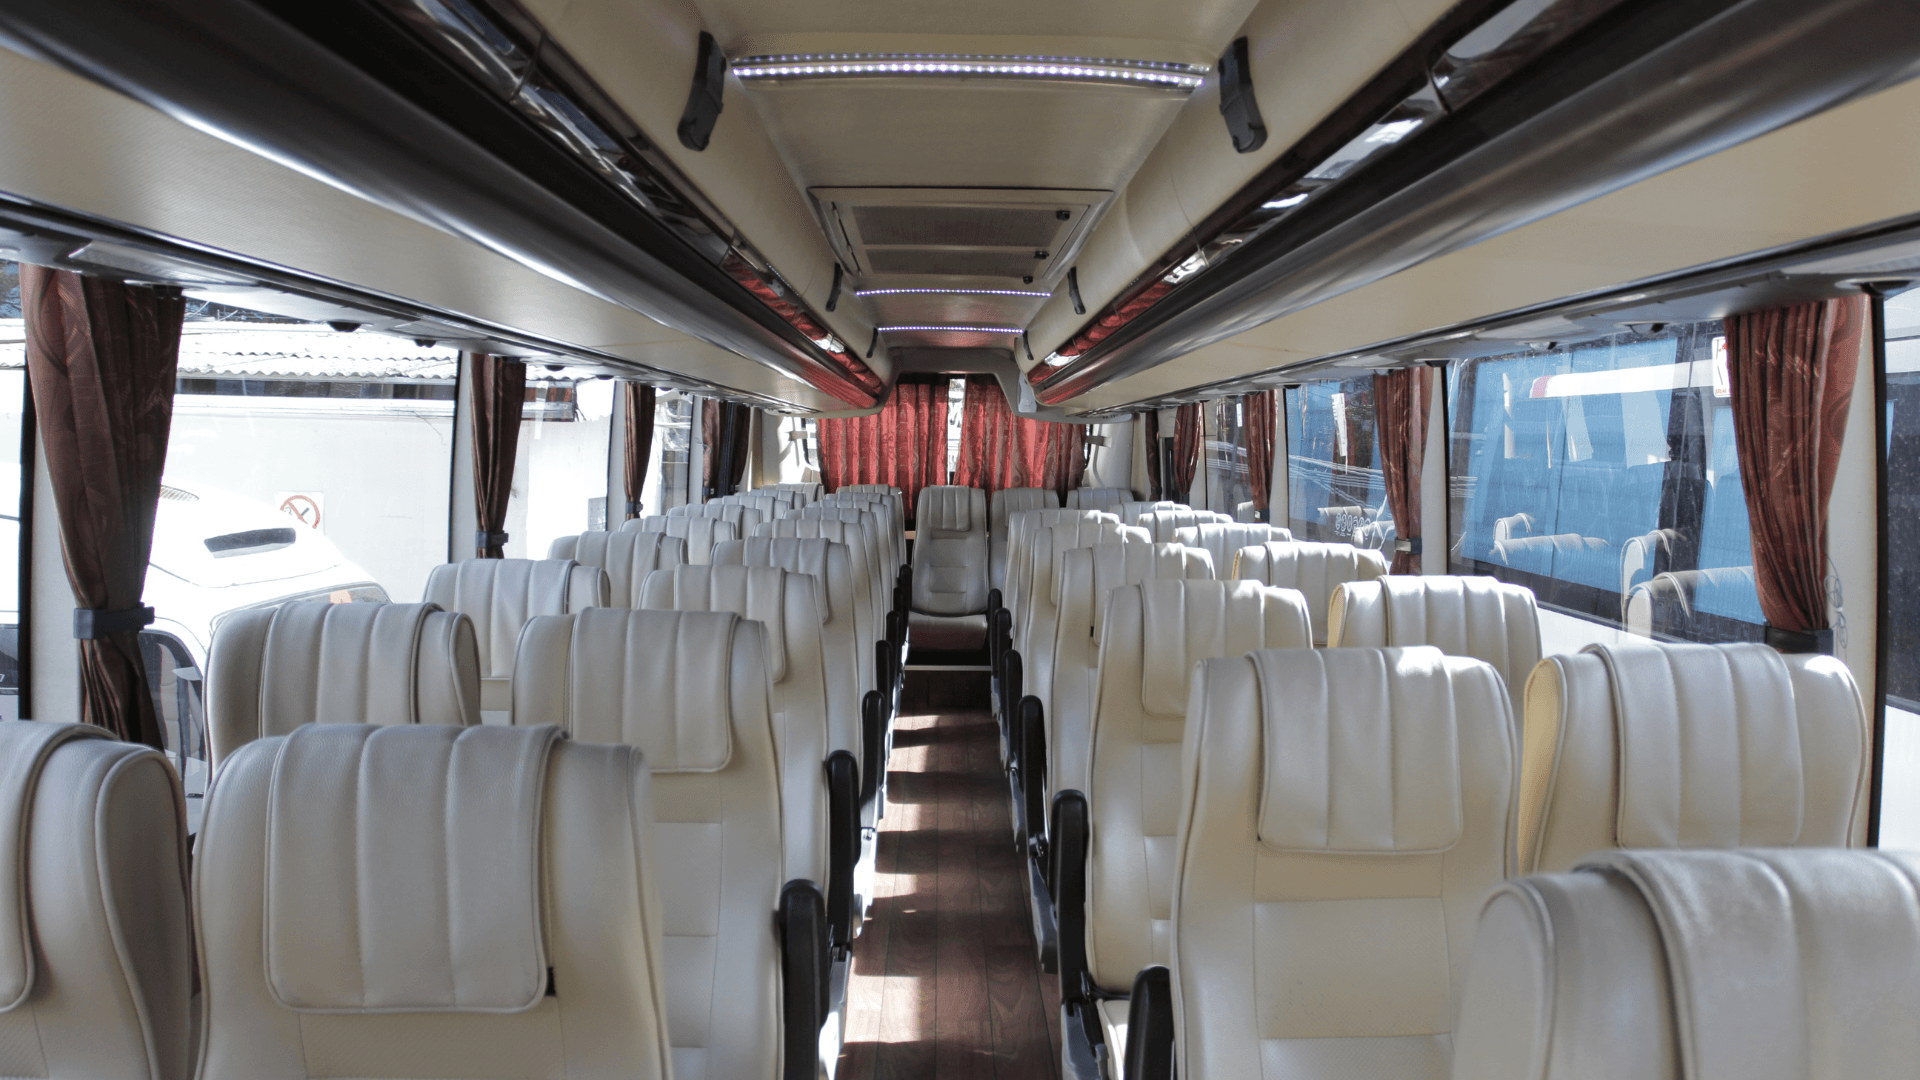 TRAC - MediumBus - Seat 35 - int0.png